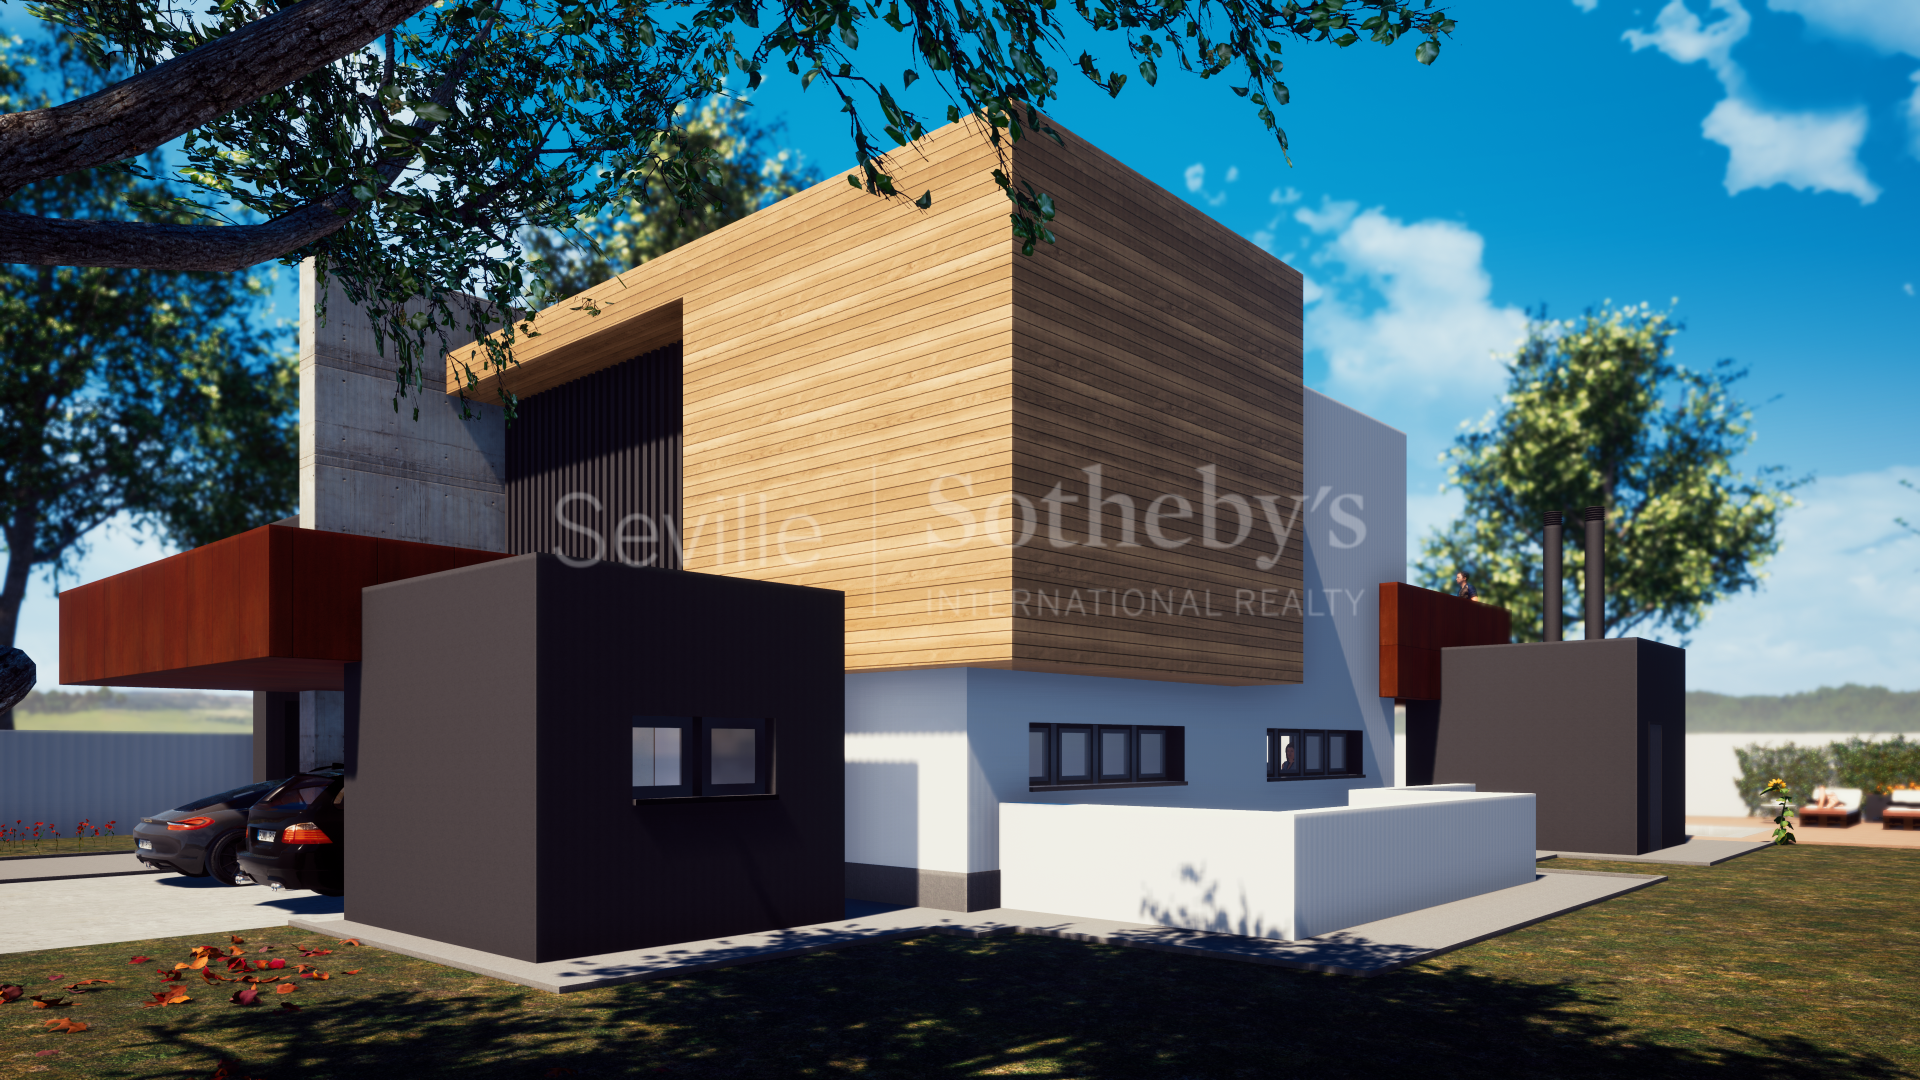 Torrequinto - Housing development of three designer villas in a residential area